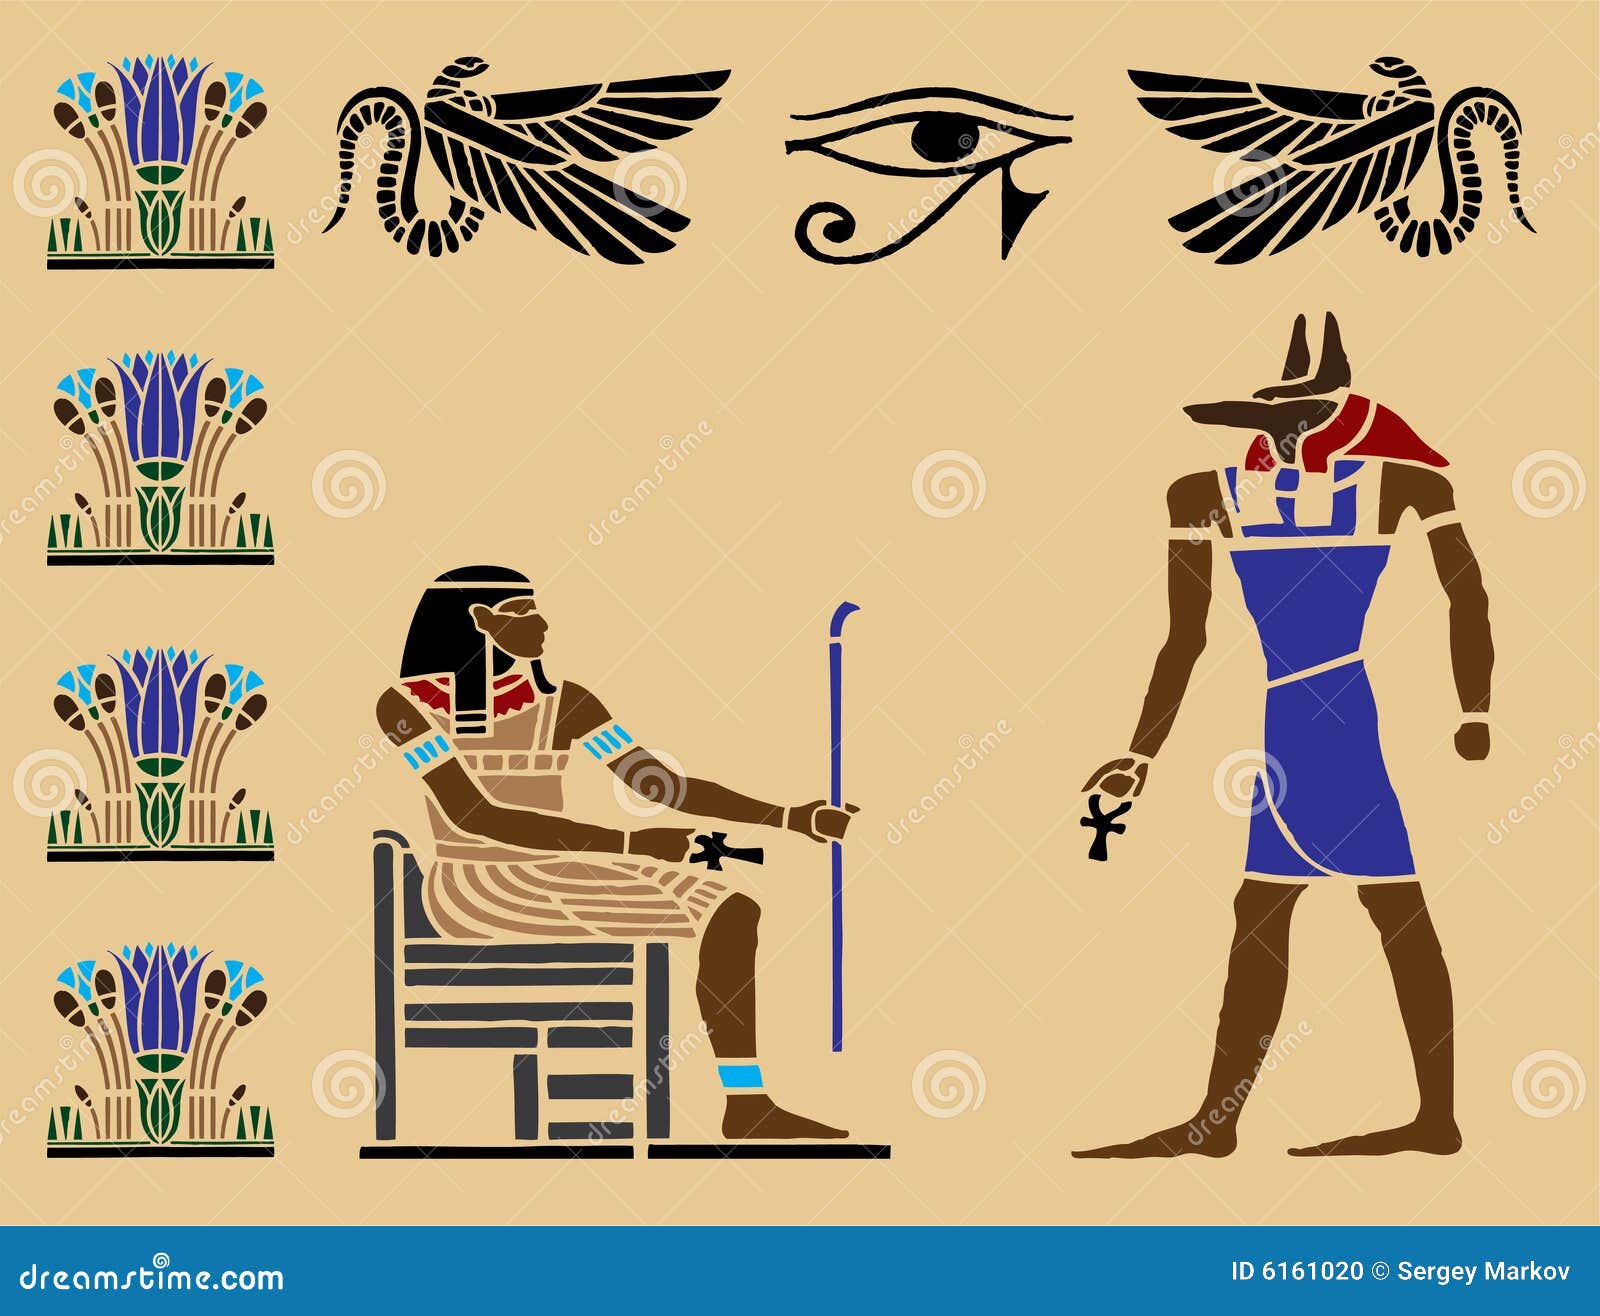 egyptian hieroglyphics - 6